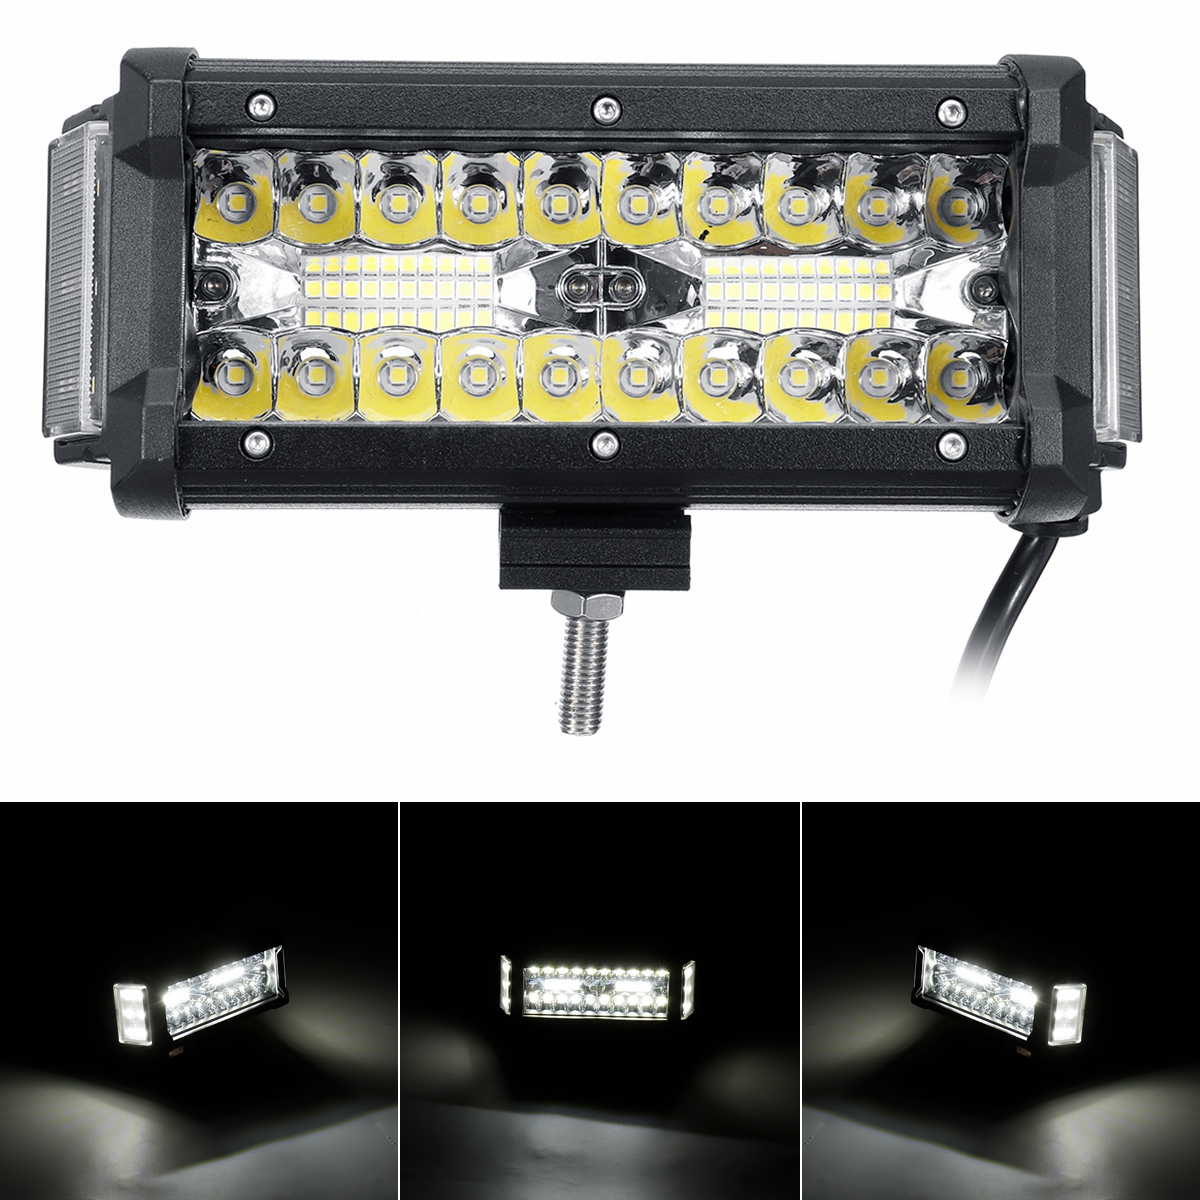 

6.5inch 56W LED Work Light Bar 10-32V IP67 Driving Lamp With Side Light For Offroad SUV ATV UTV 4WD Truck